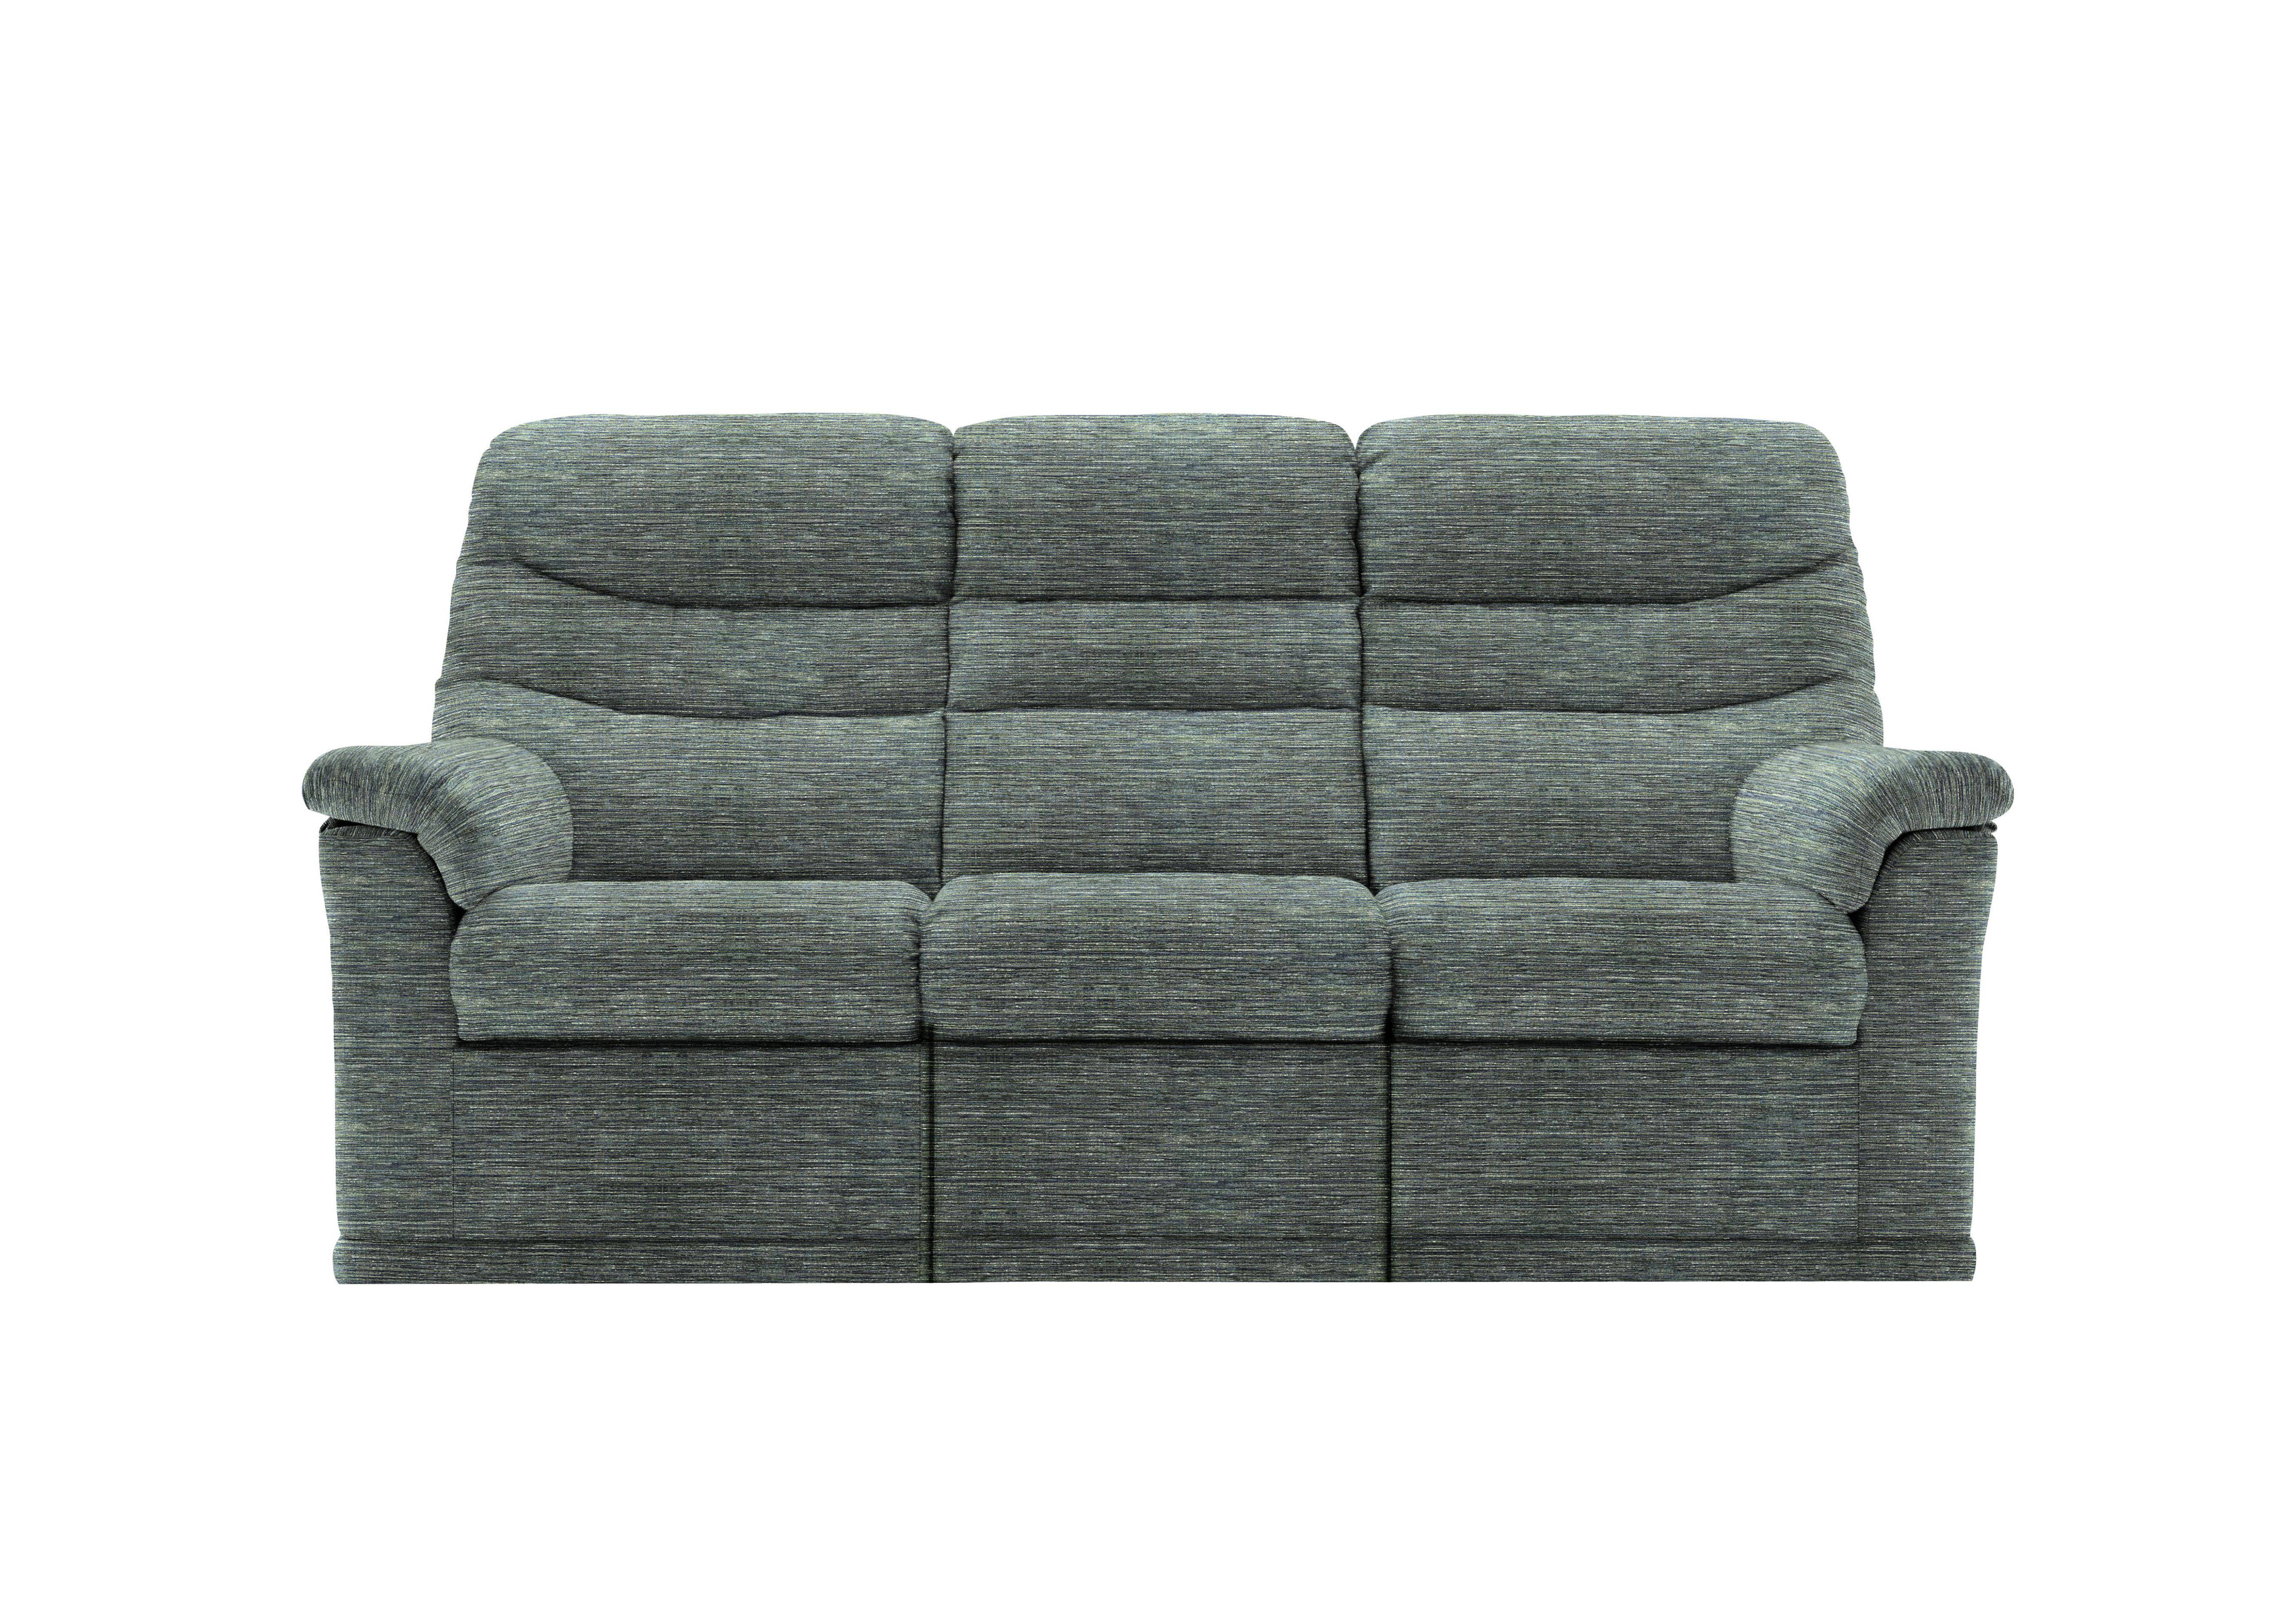 Malvern 3 Seater Fabric Sofa in B925 Waffle Marine on Furniture Village